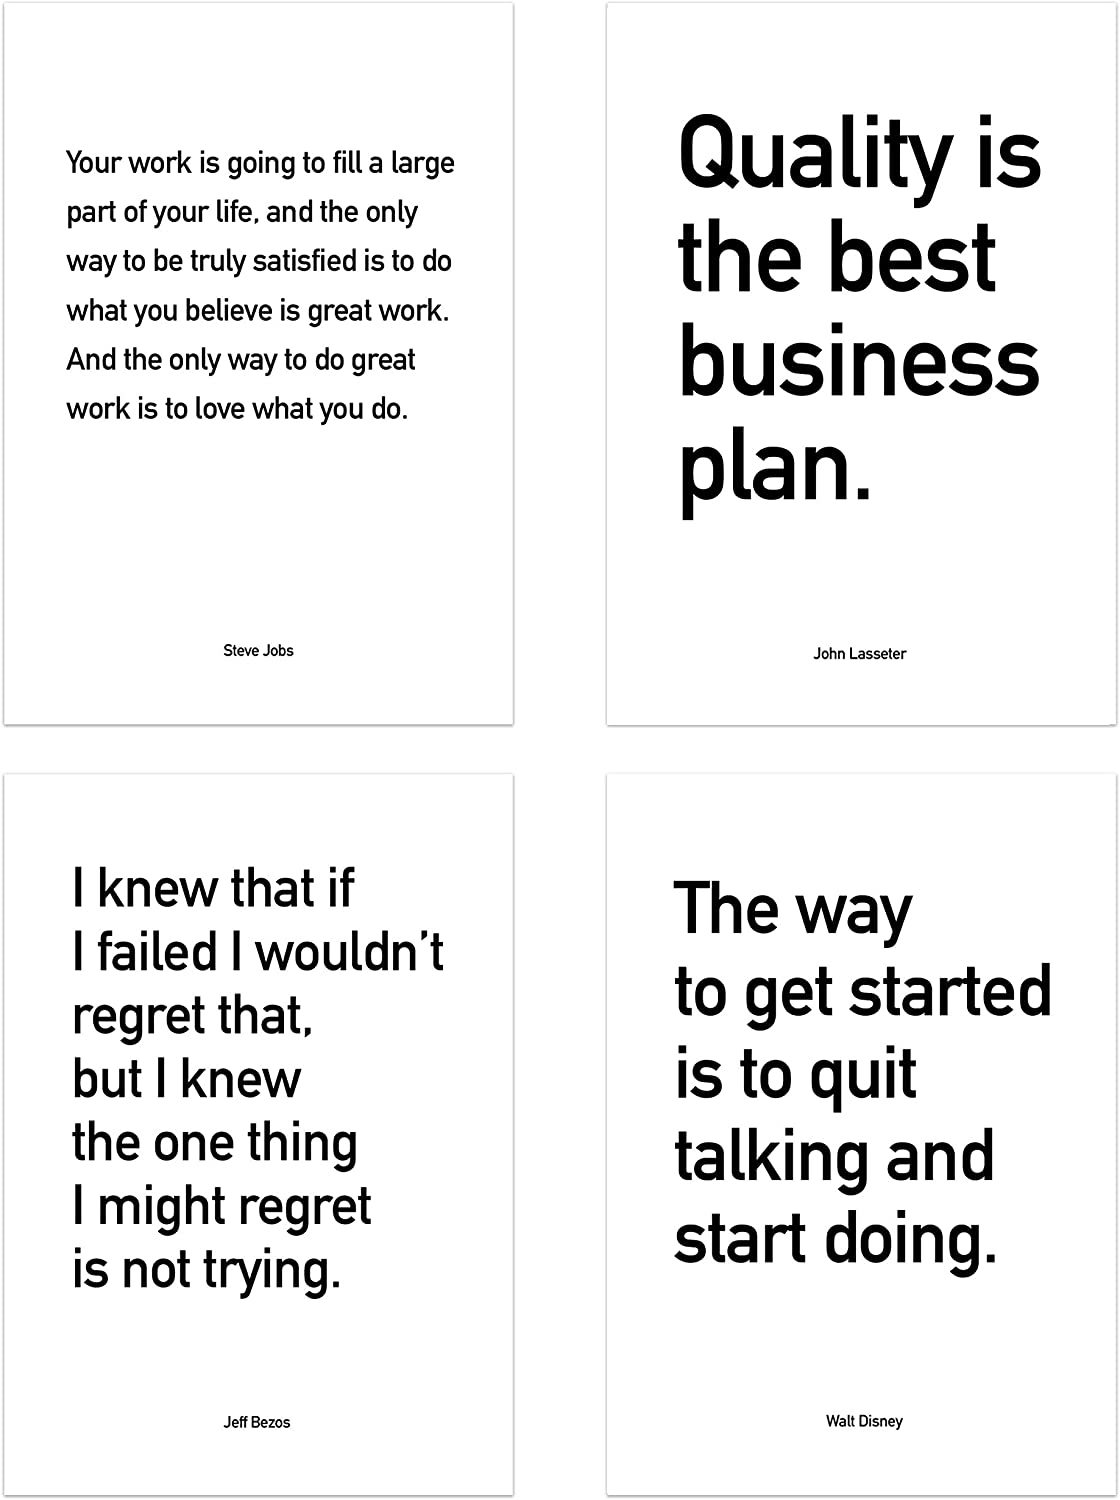 PICSonPAPER Poster 4er-Set Business Quotes ungerahmt DIN A4, Zitate von Jeff Bezos, Steve Jobs, John Lasseter und Walt Dinsey, Startup, Entrepreneur, Motivation (DIN A4, ungerahmt)